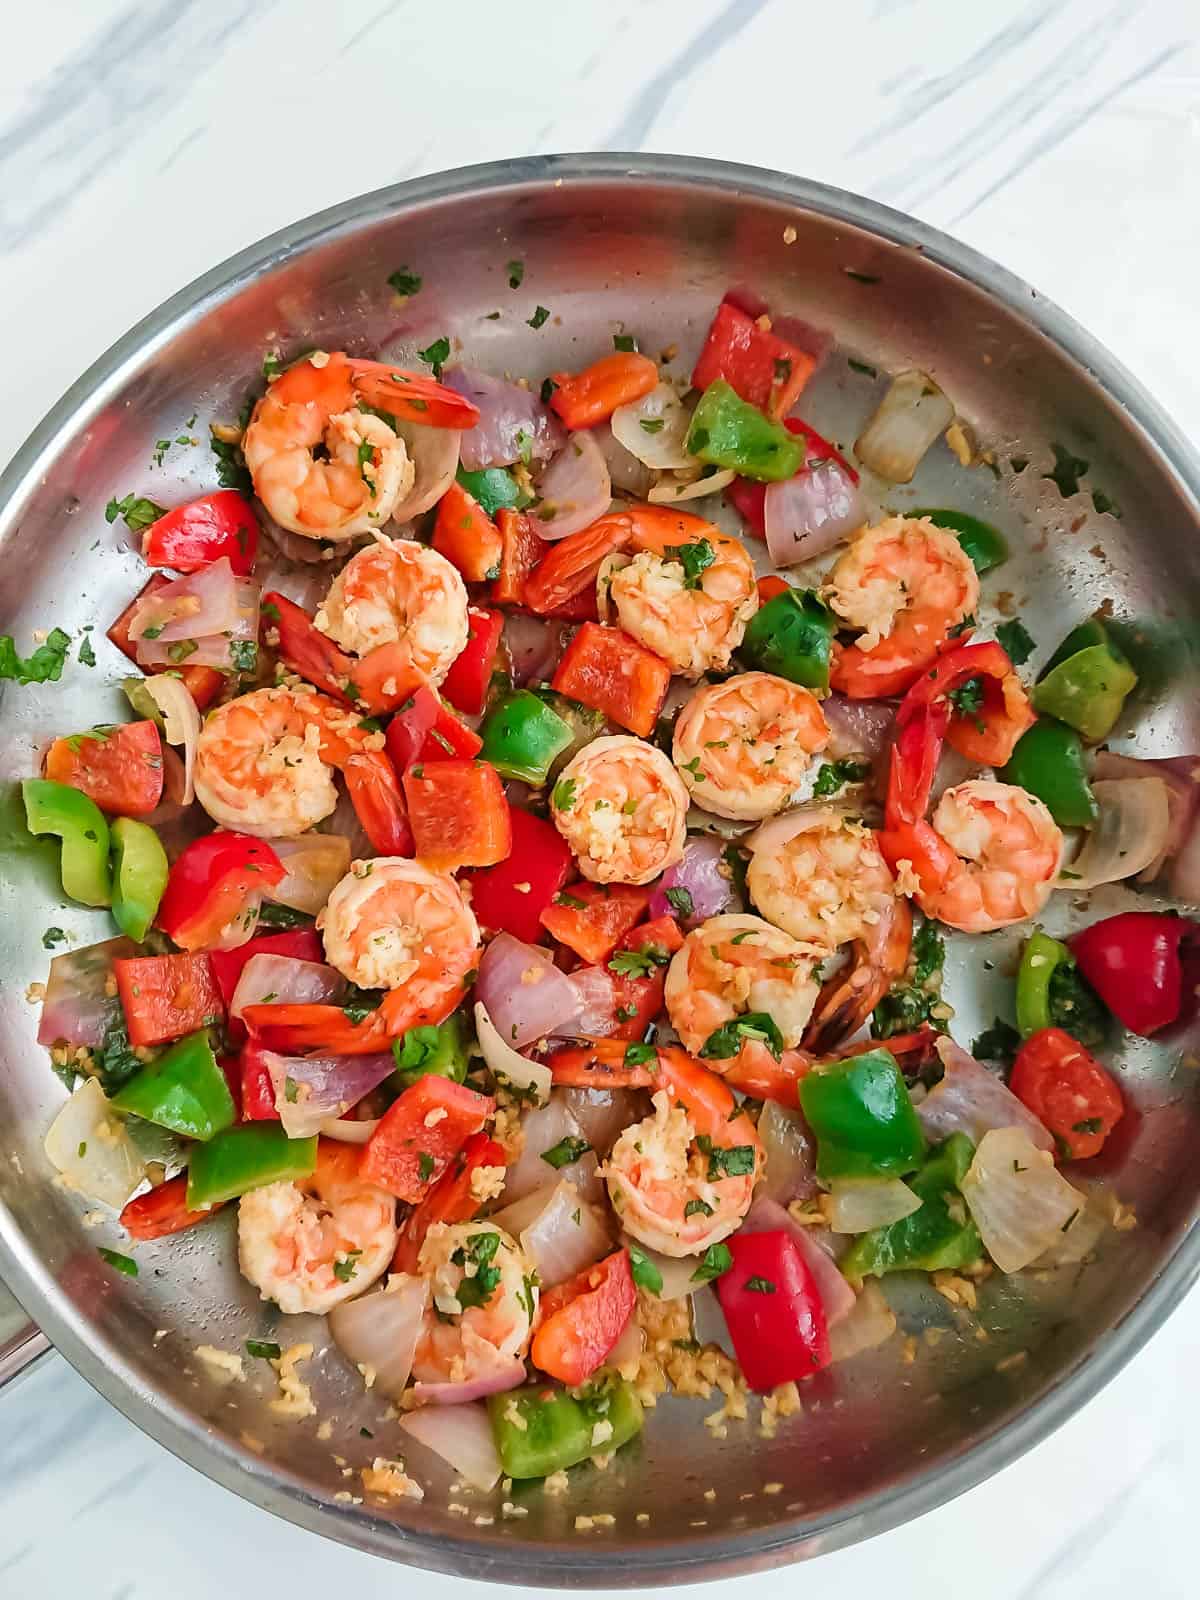 garlic shrimps\prawns in a stainless steel pan